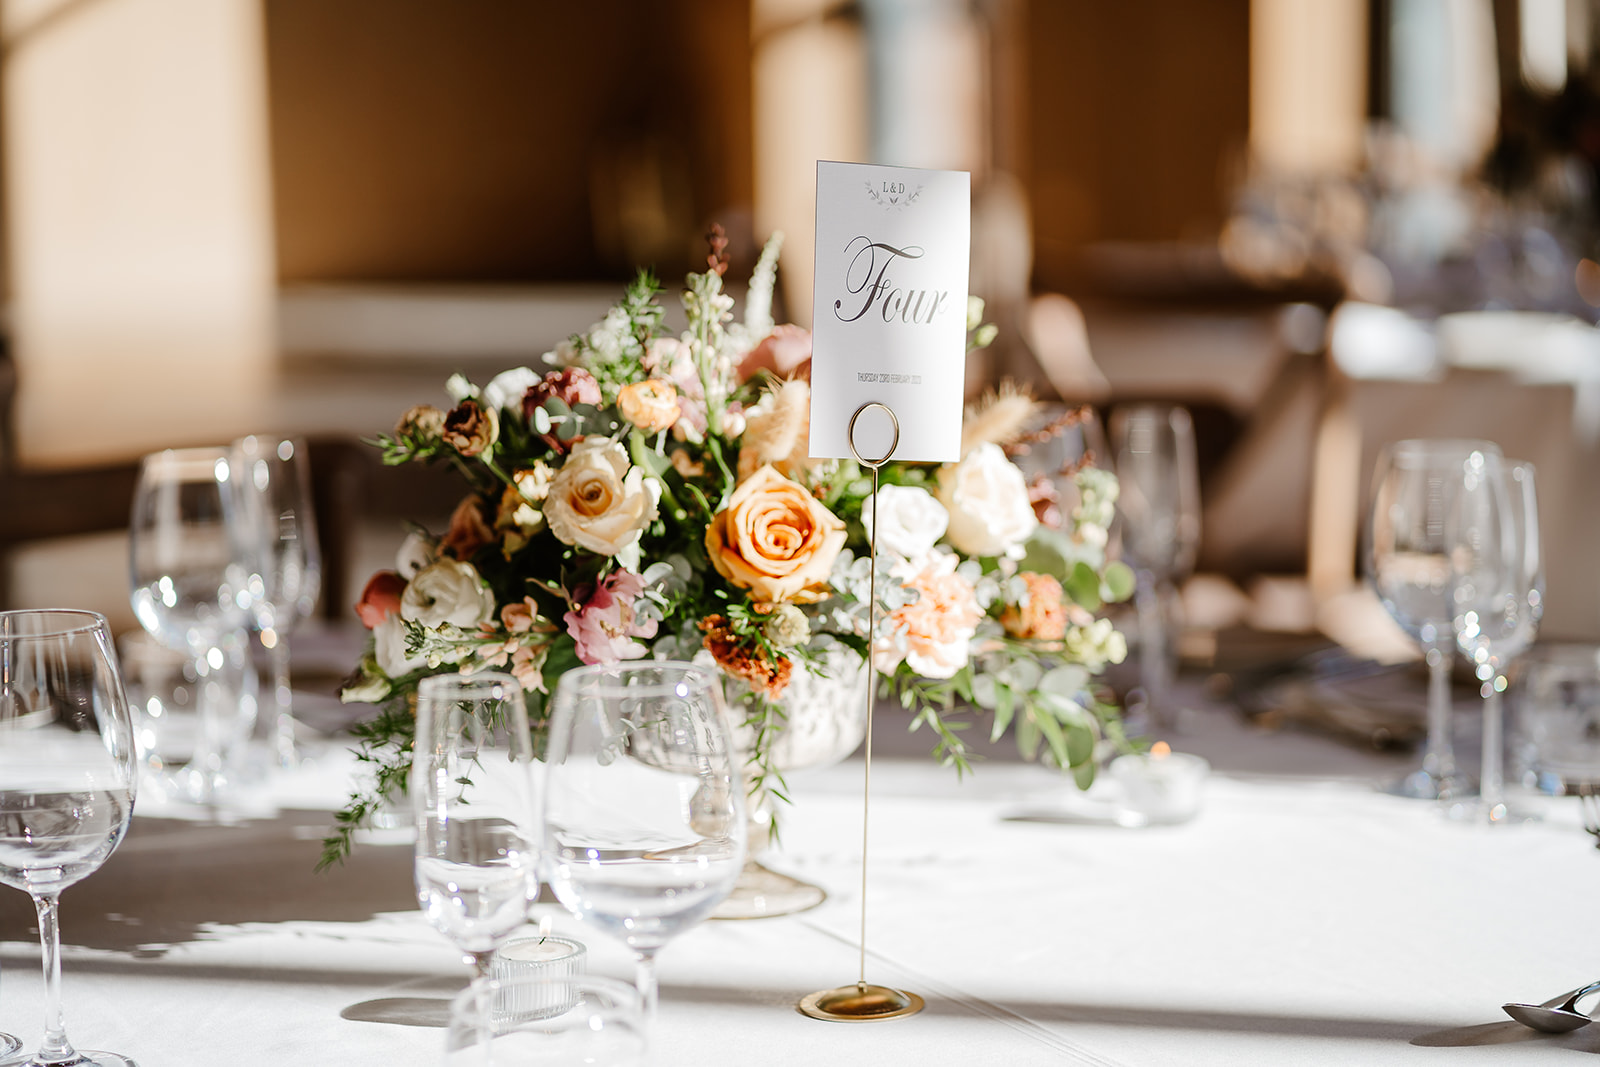 Sunlit details on table at wedding